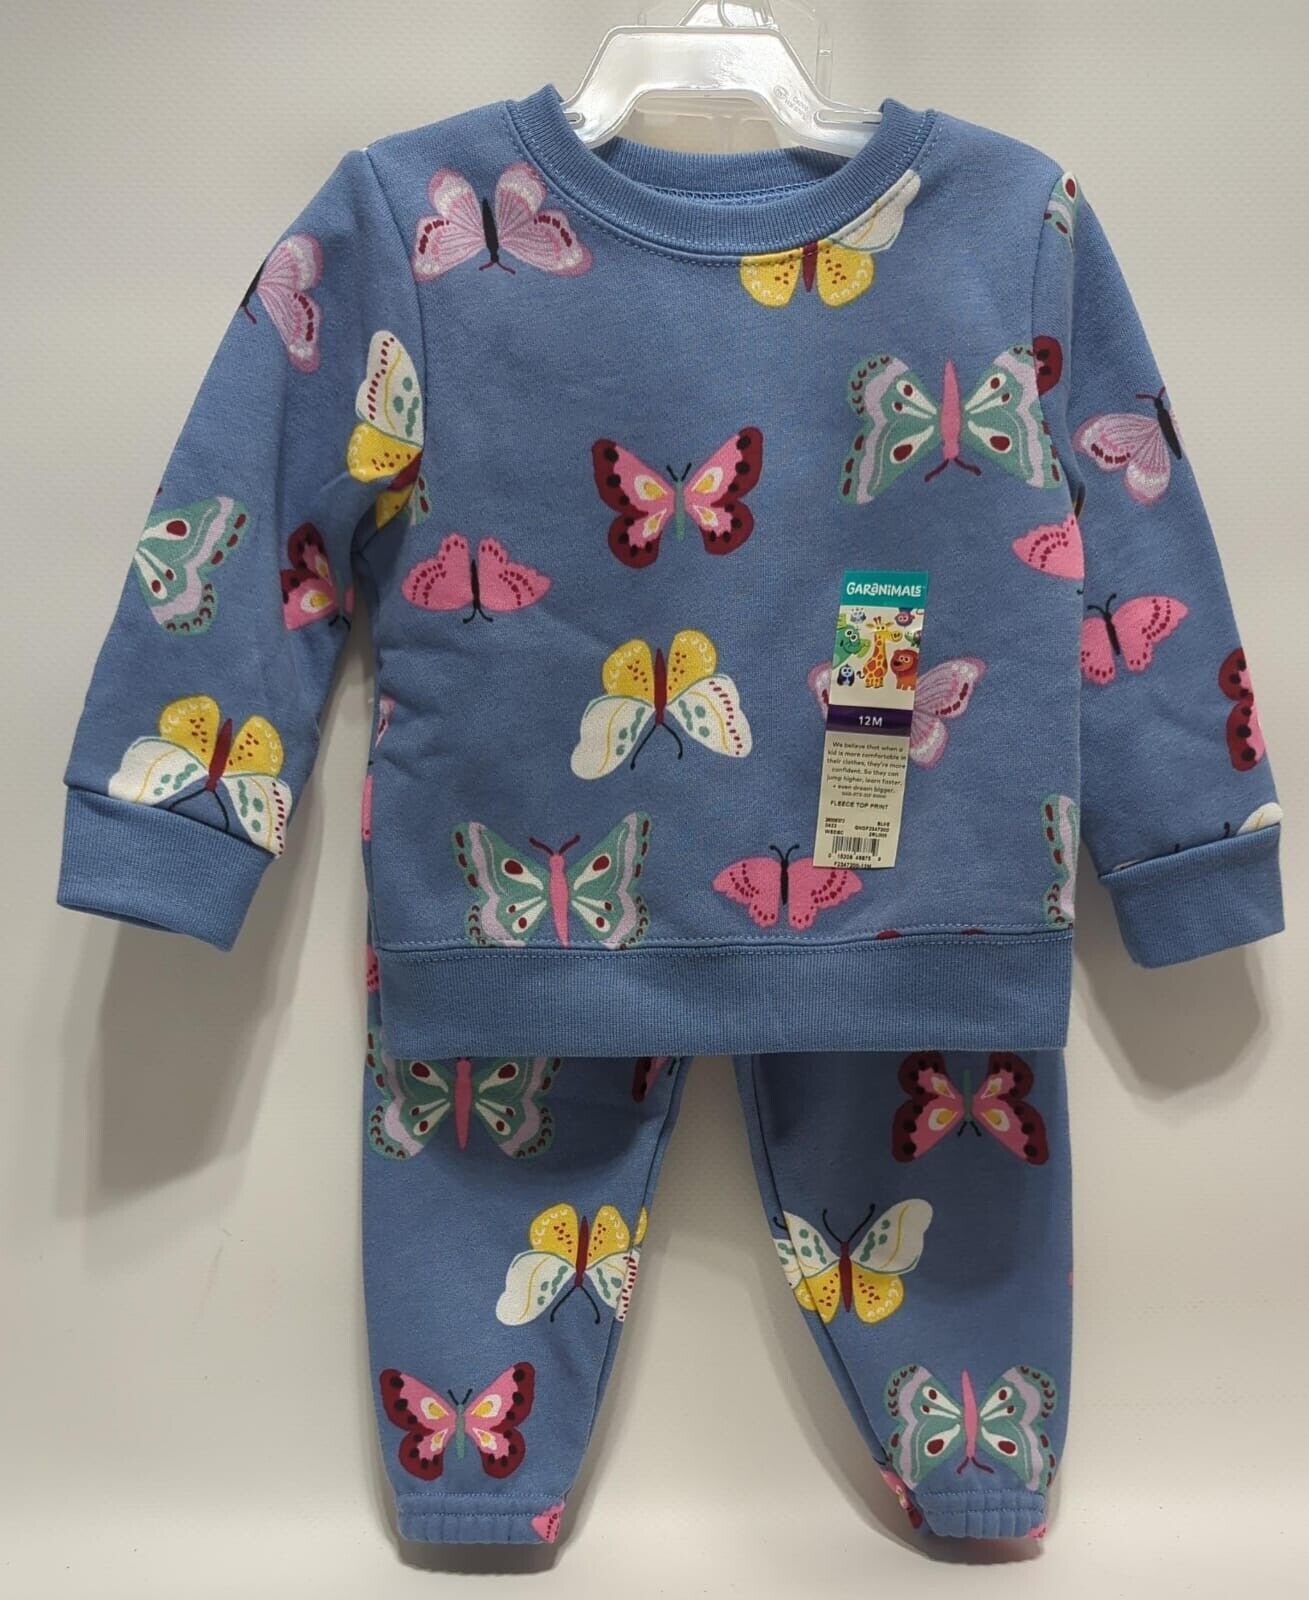 Primary image for Garanimals Toddler Girl 2 Piece Fleece Top & Jogger Pant Set, Blue Size 12M